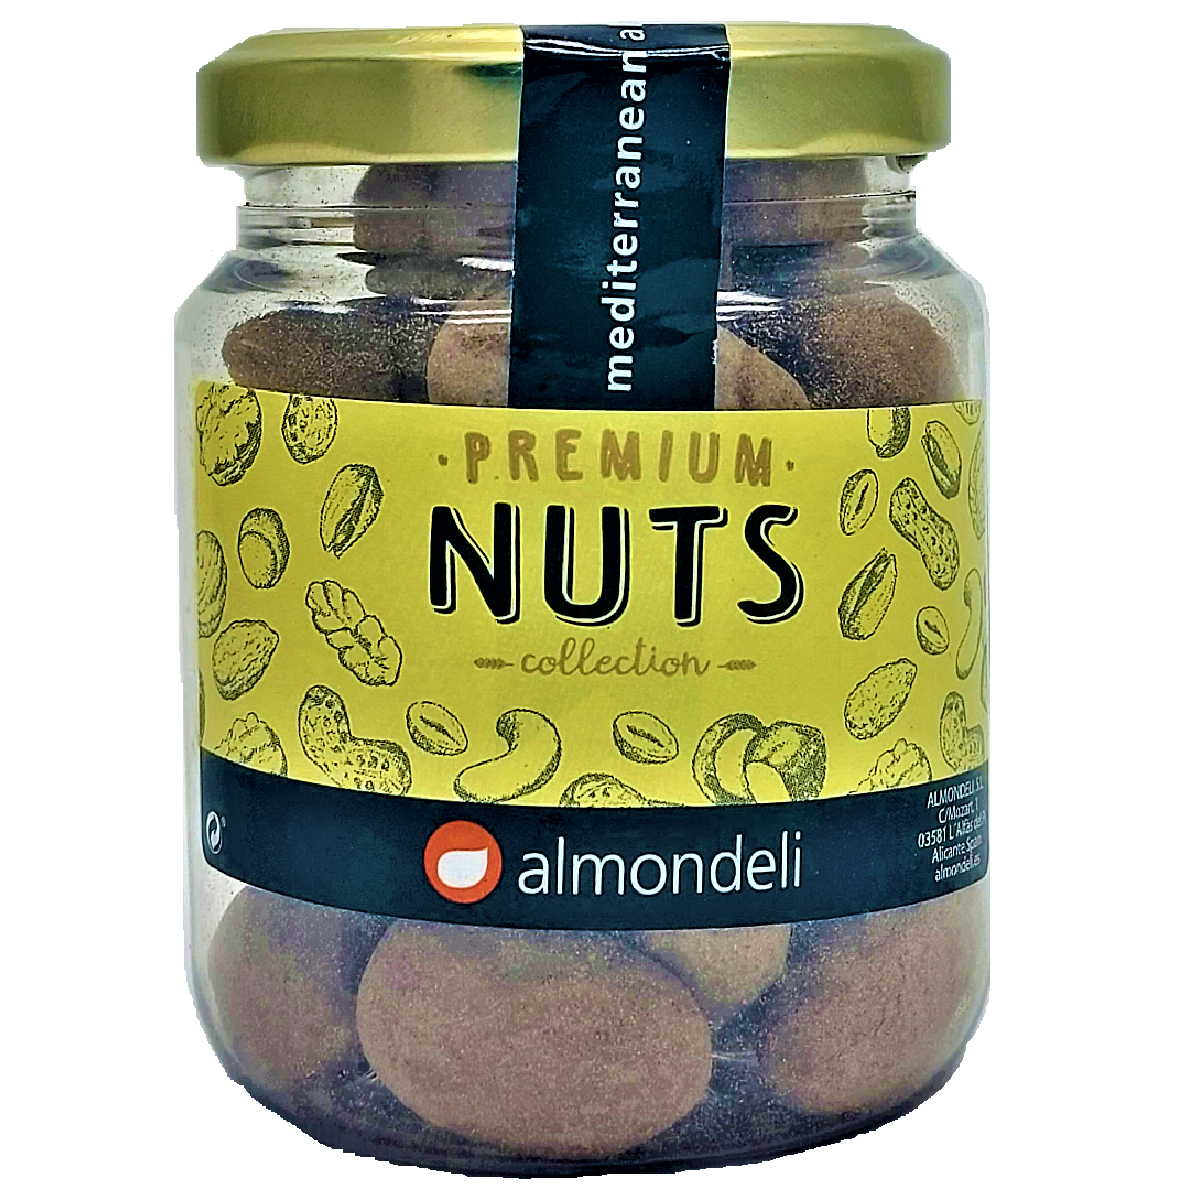 almondeli Premium Nuts Collection Cocoa Dusted Chocolate Almonds 140g